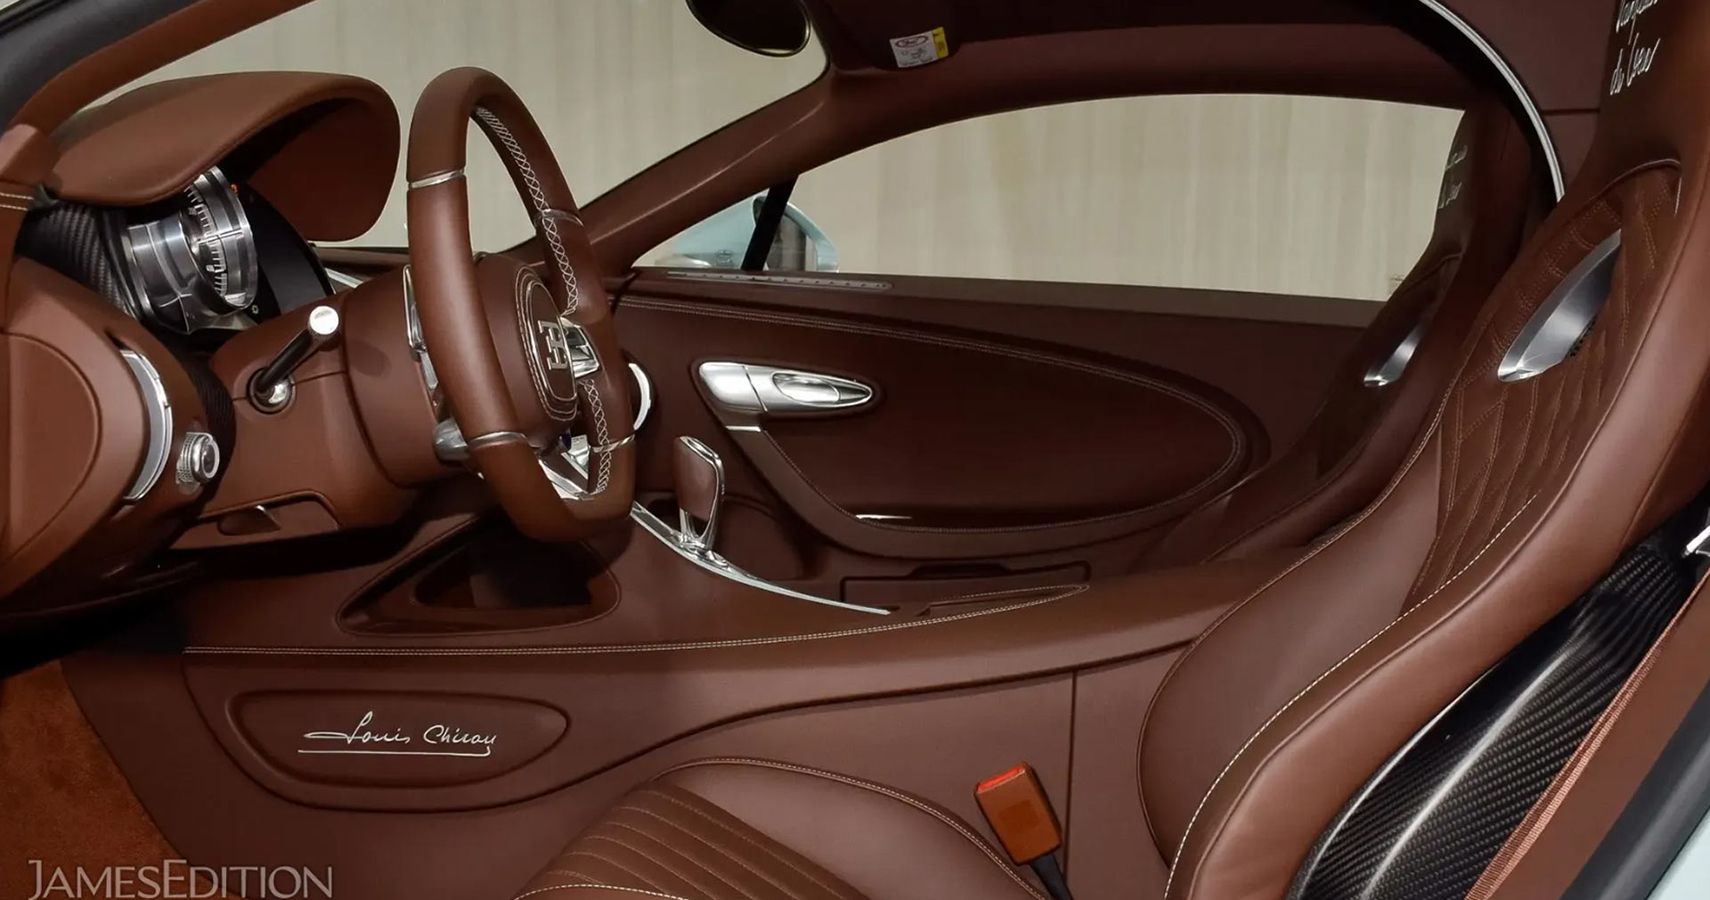 Bugatti Chiron Vainqueur de Coeur leather interior